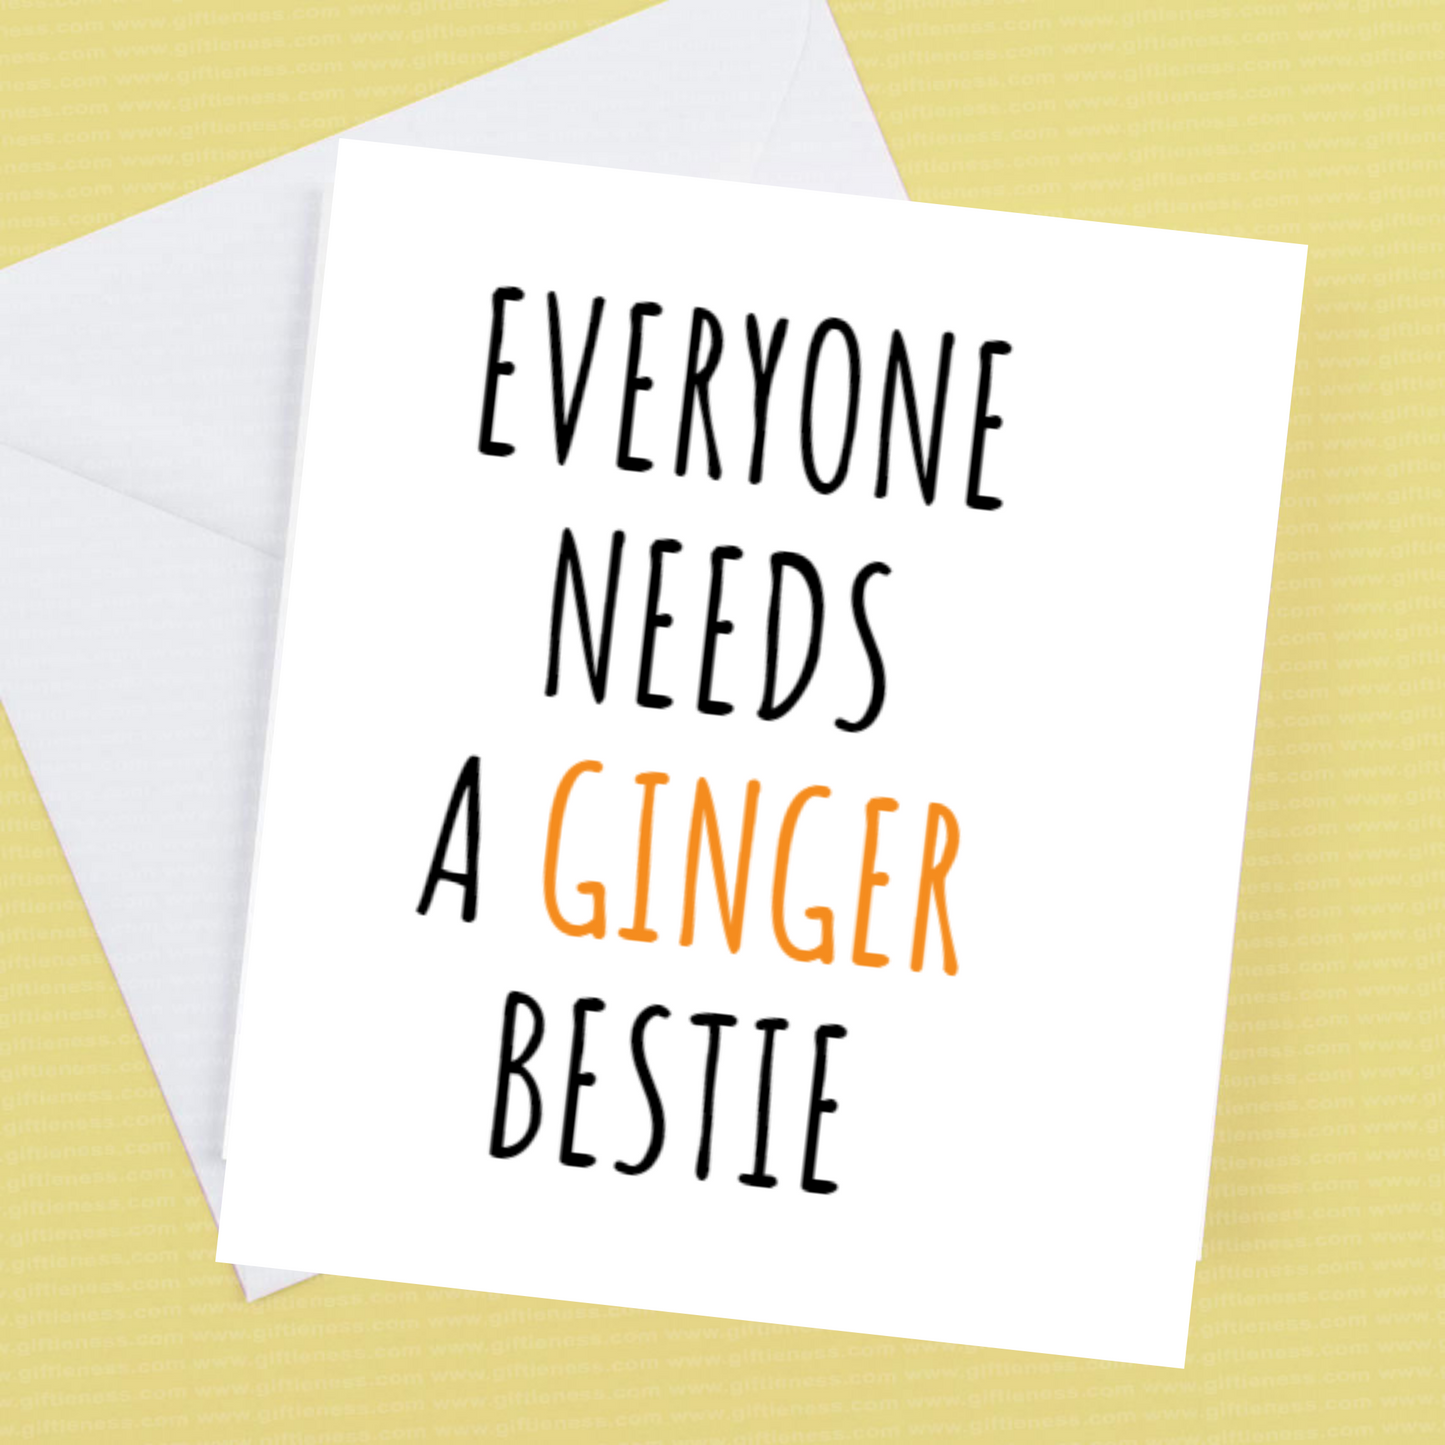 Everyone needs a Ginger Bestie